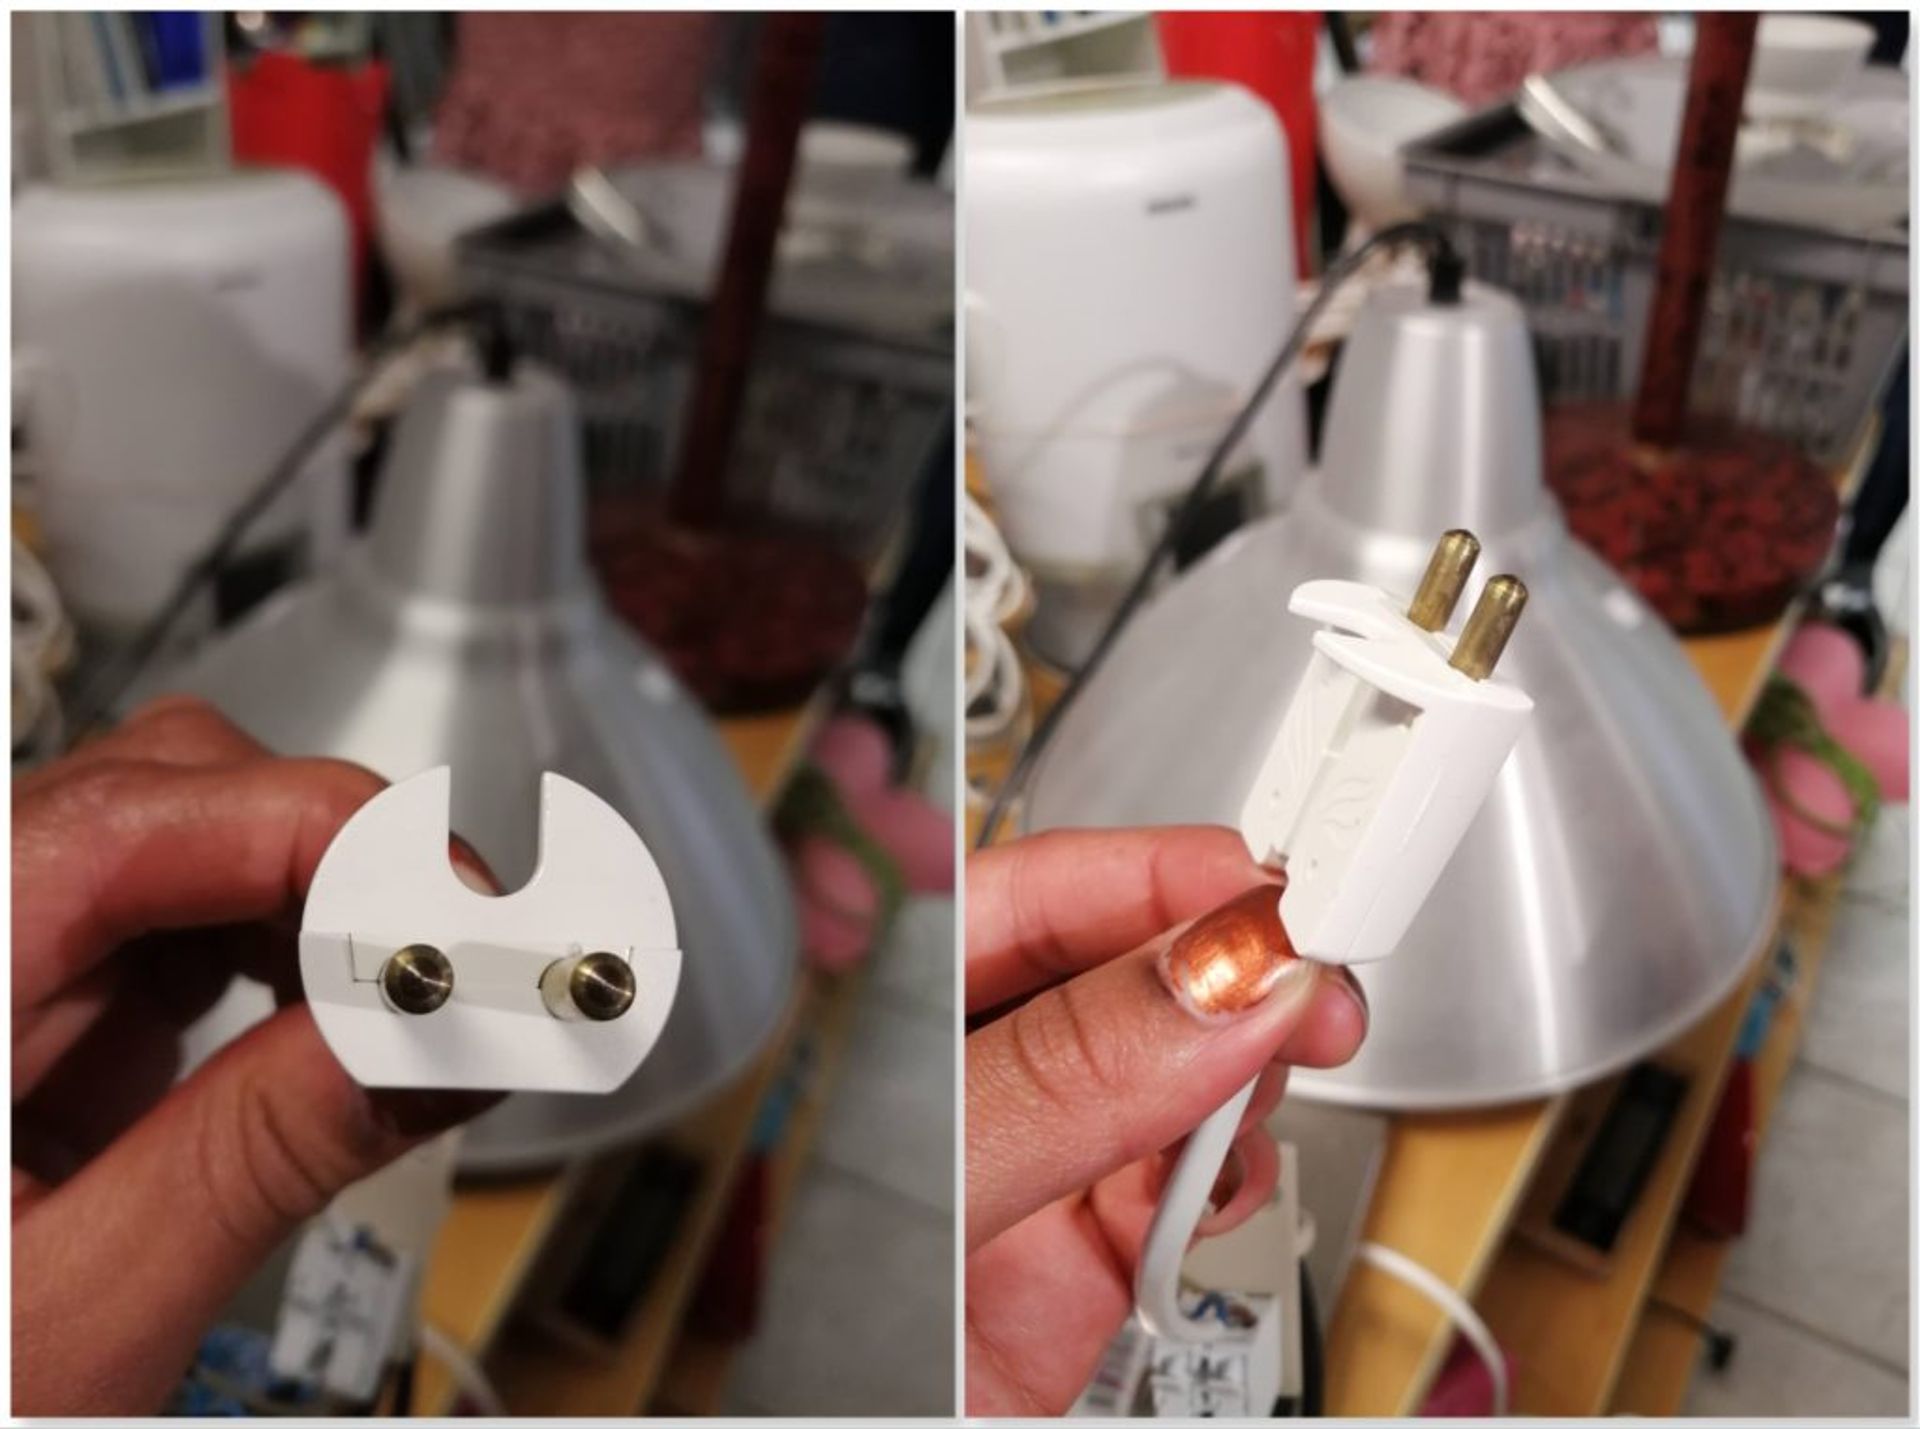 Two pin EU light plugs.